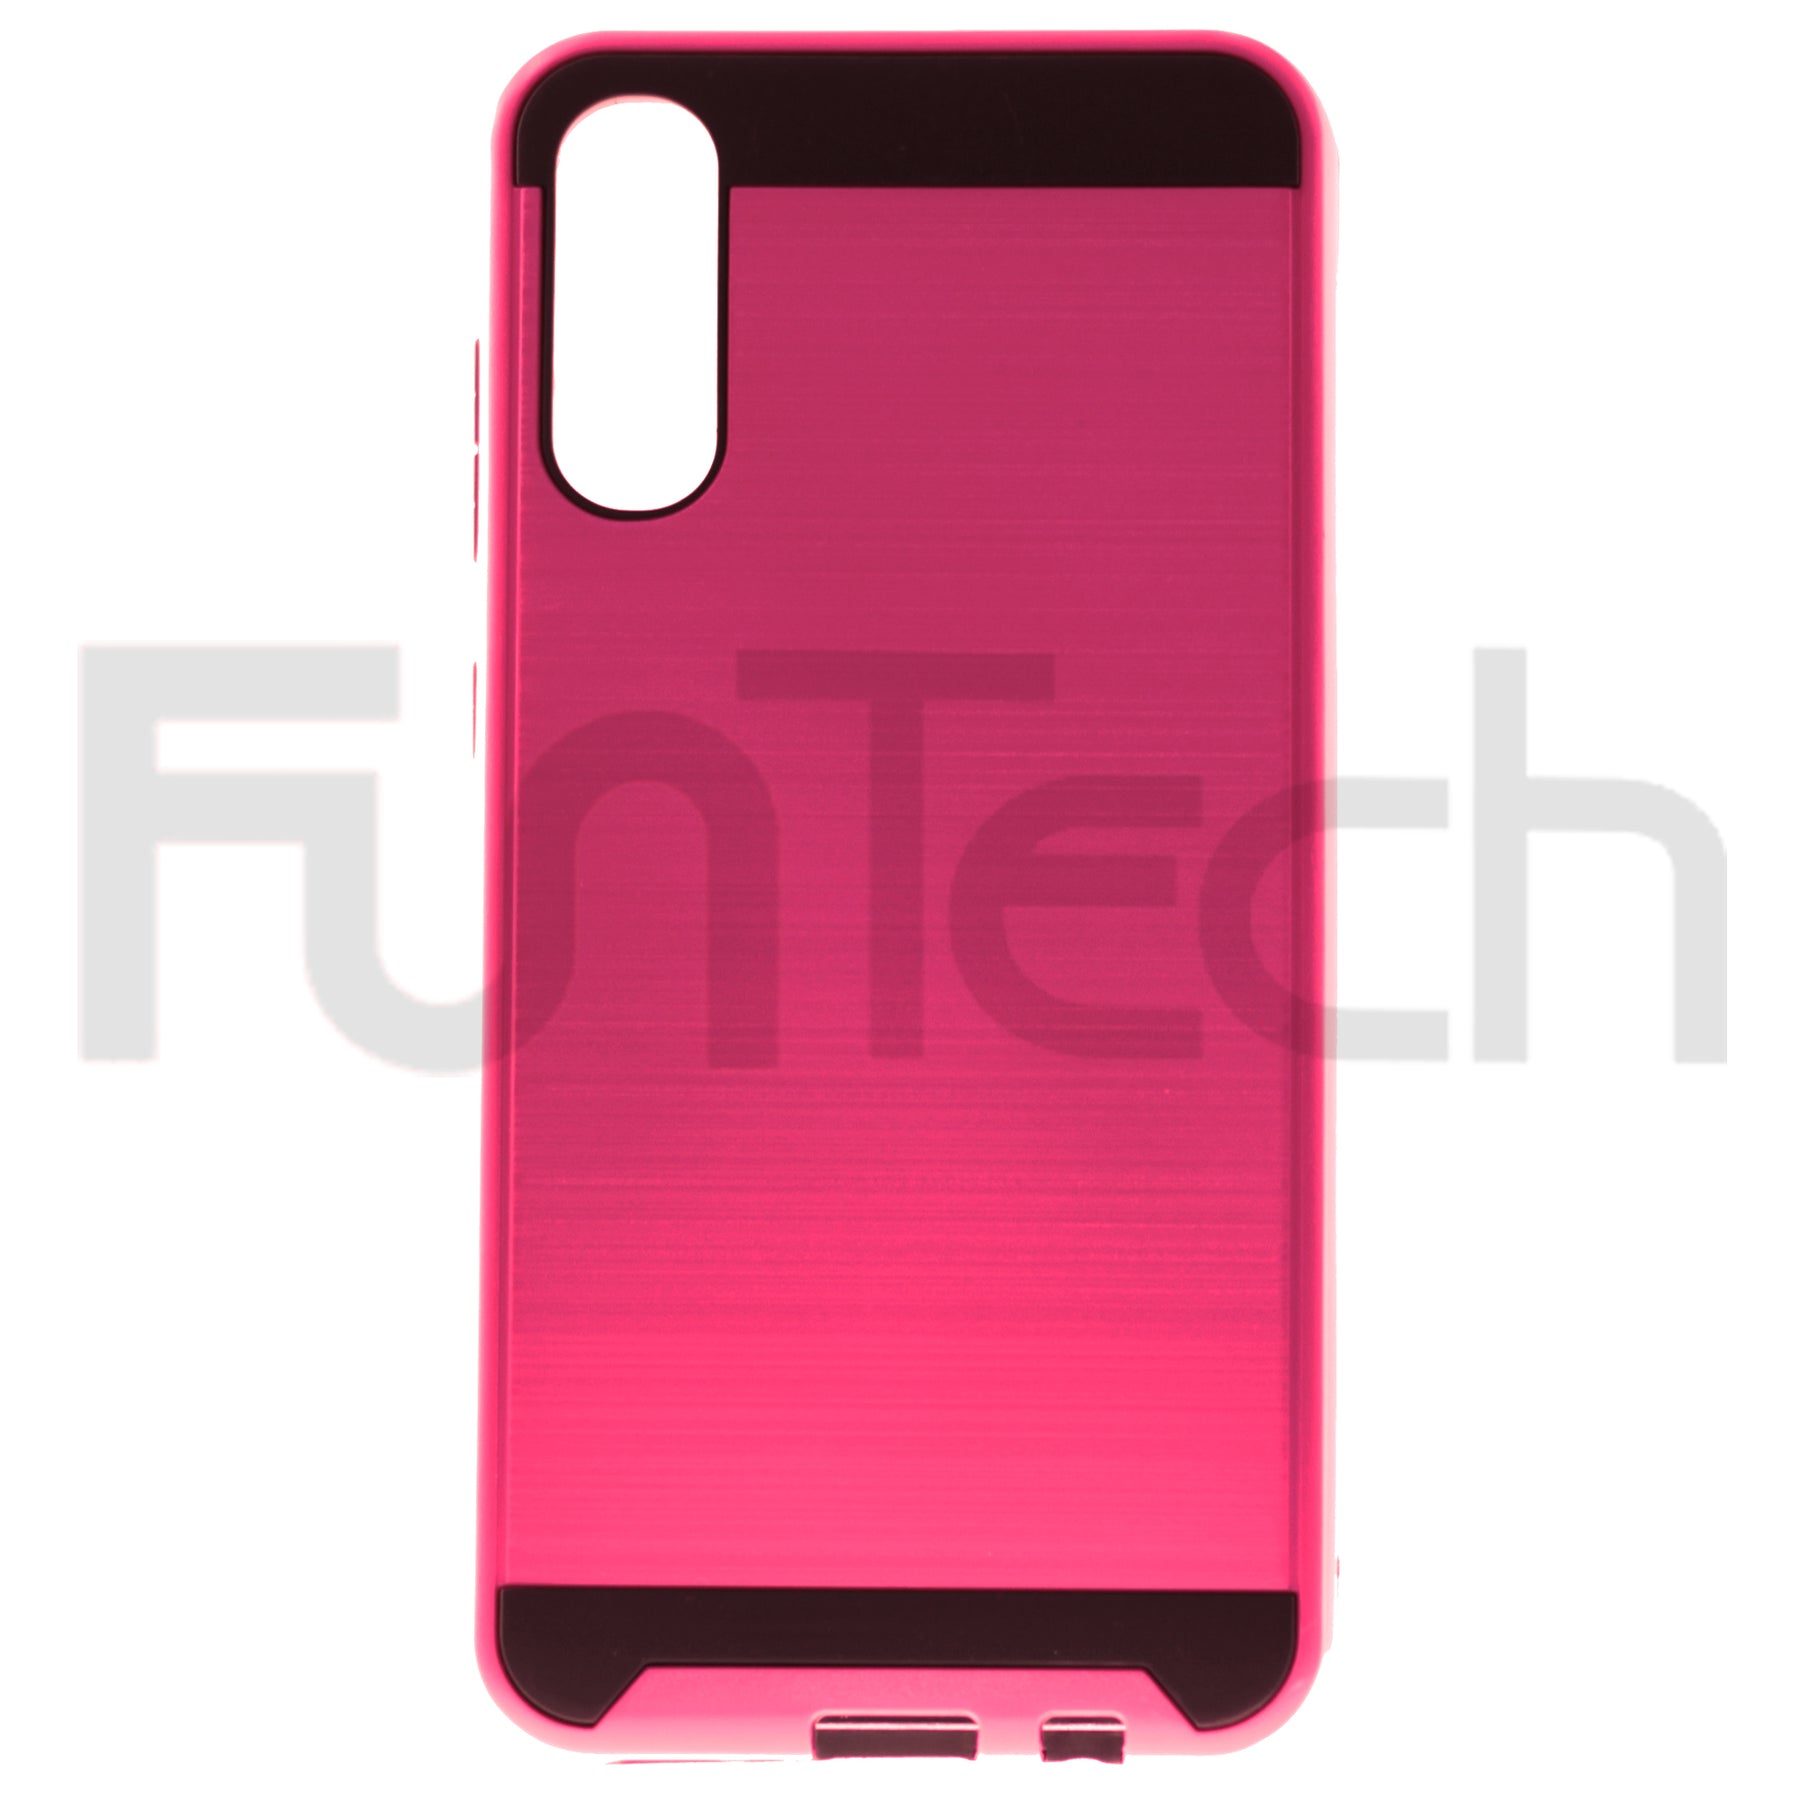 Samsung A70, Slim Armor Case, Color Pink.